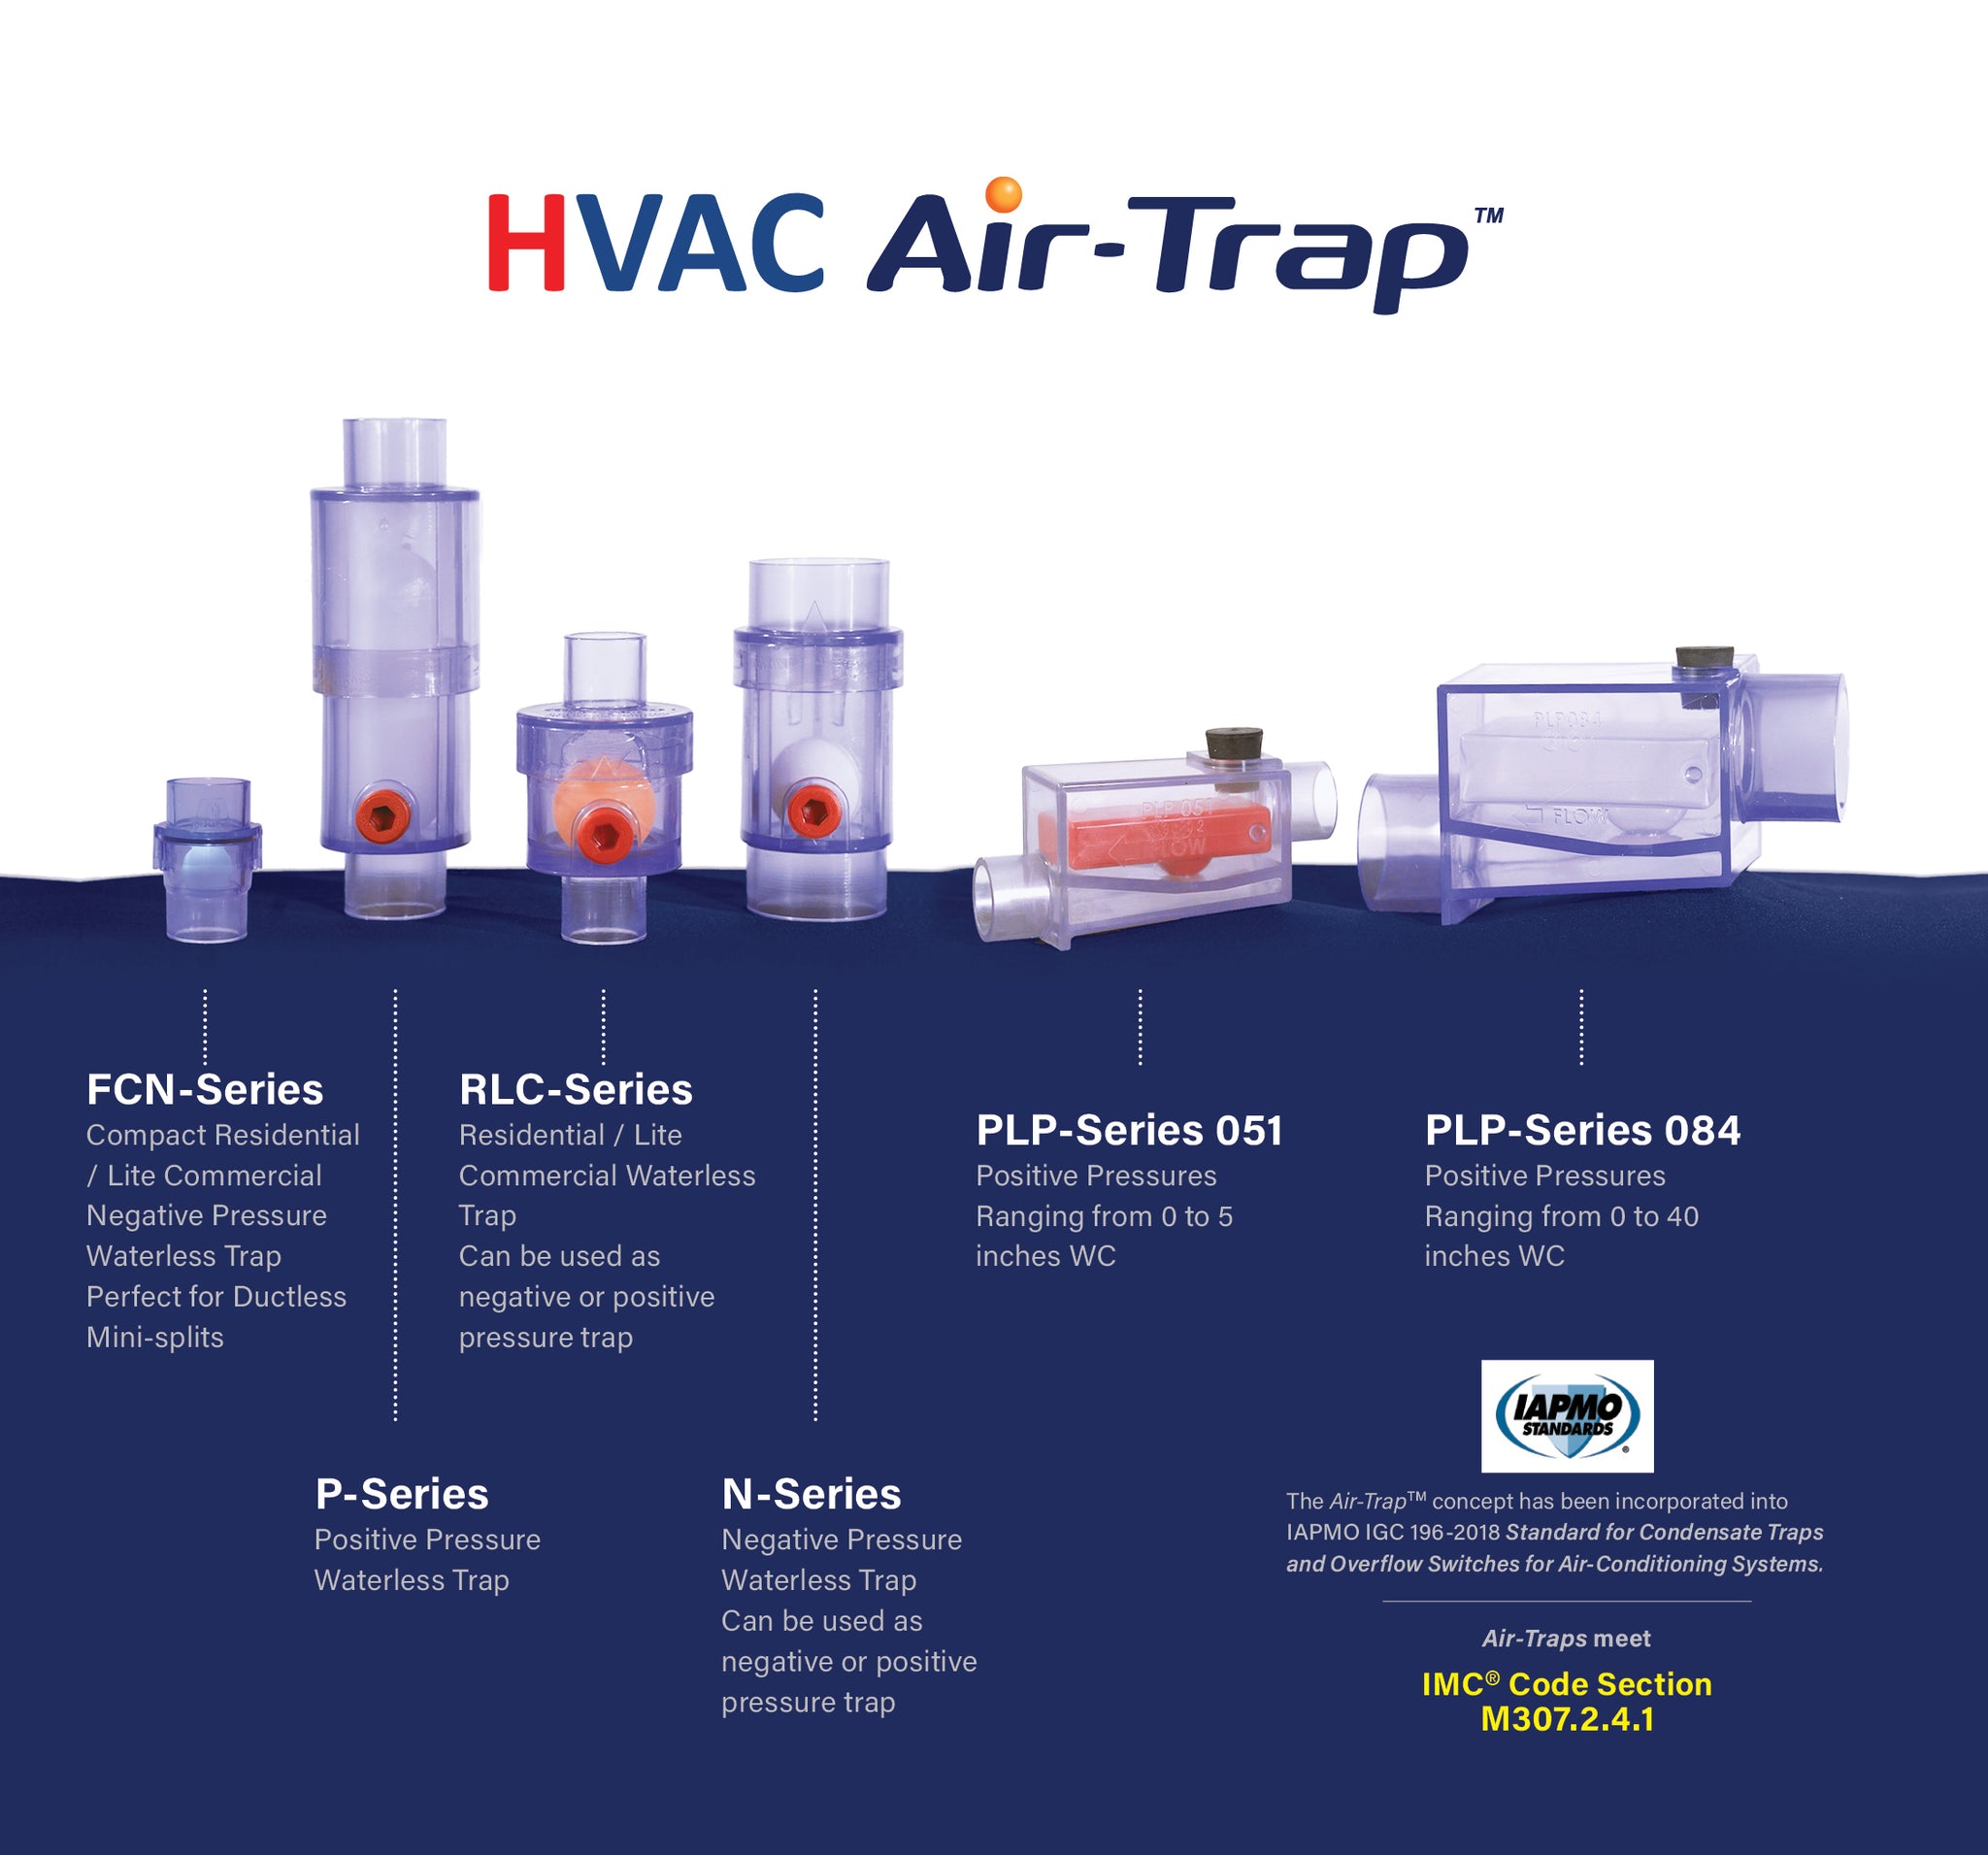 HVAC Air-Trap Waterless HVAC Condensate Traps Concept  -  Des Champs Technologies